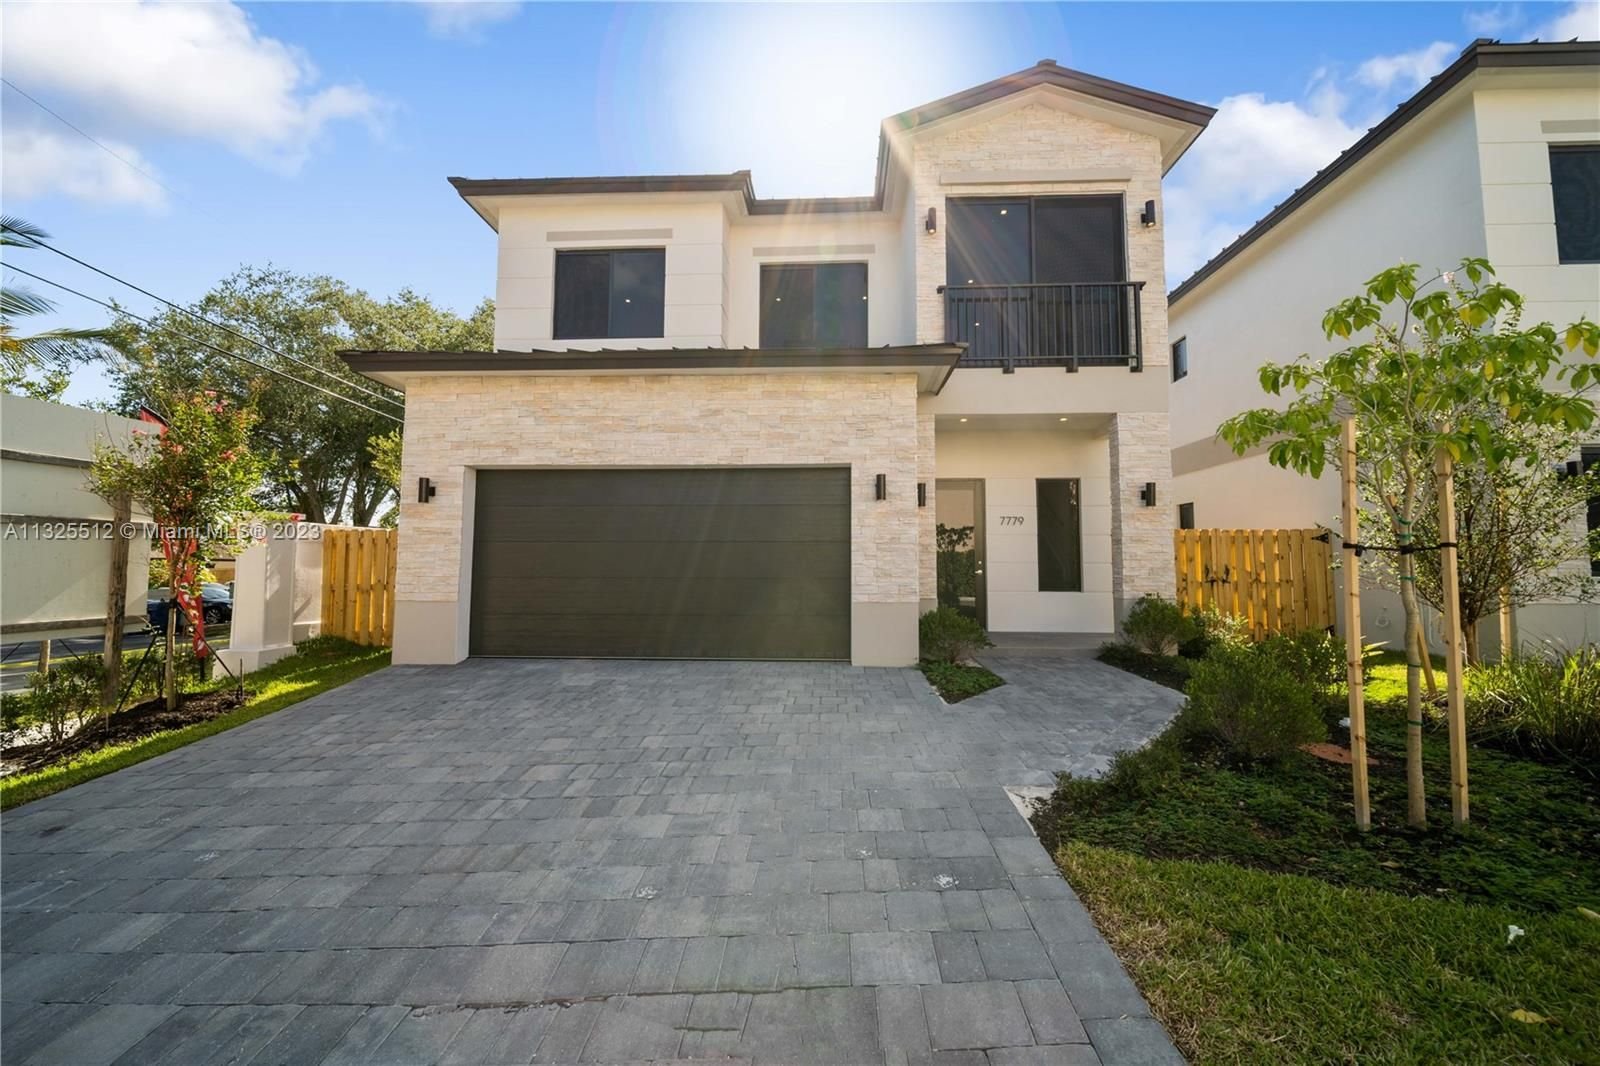 Real estate property located at 7779 99th St, Miami-Dade County, Miami, FL